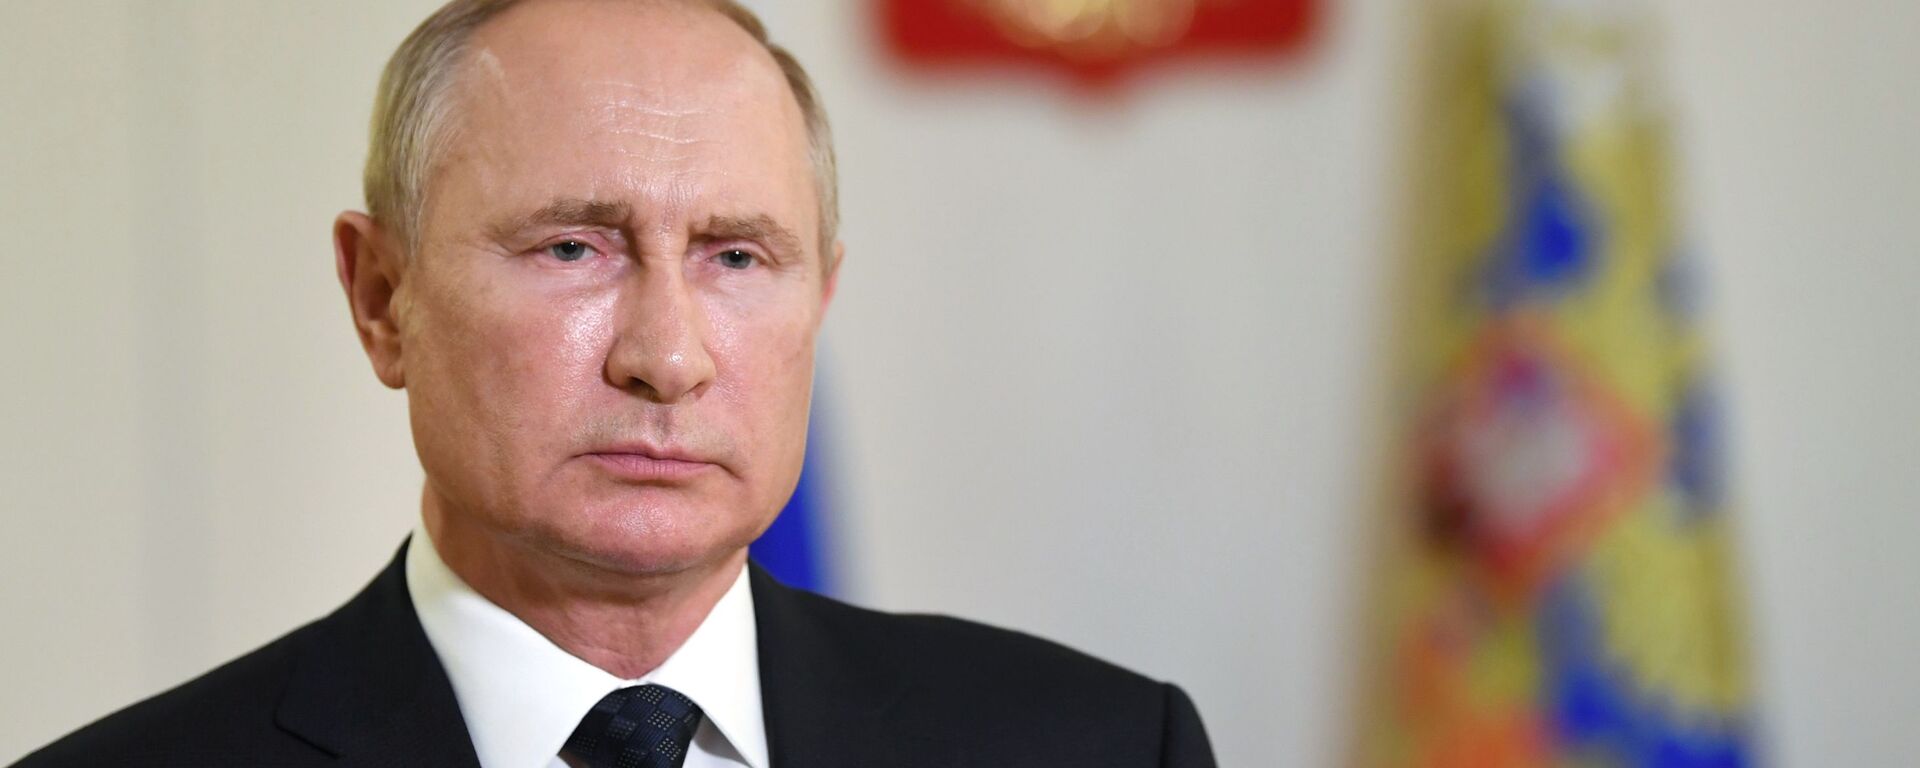 Vladímir Putin, presidente de Rusia - Sputnik Mundo, 1920, 29.04.2021